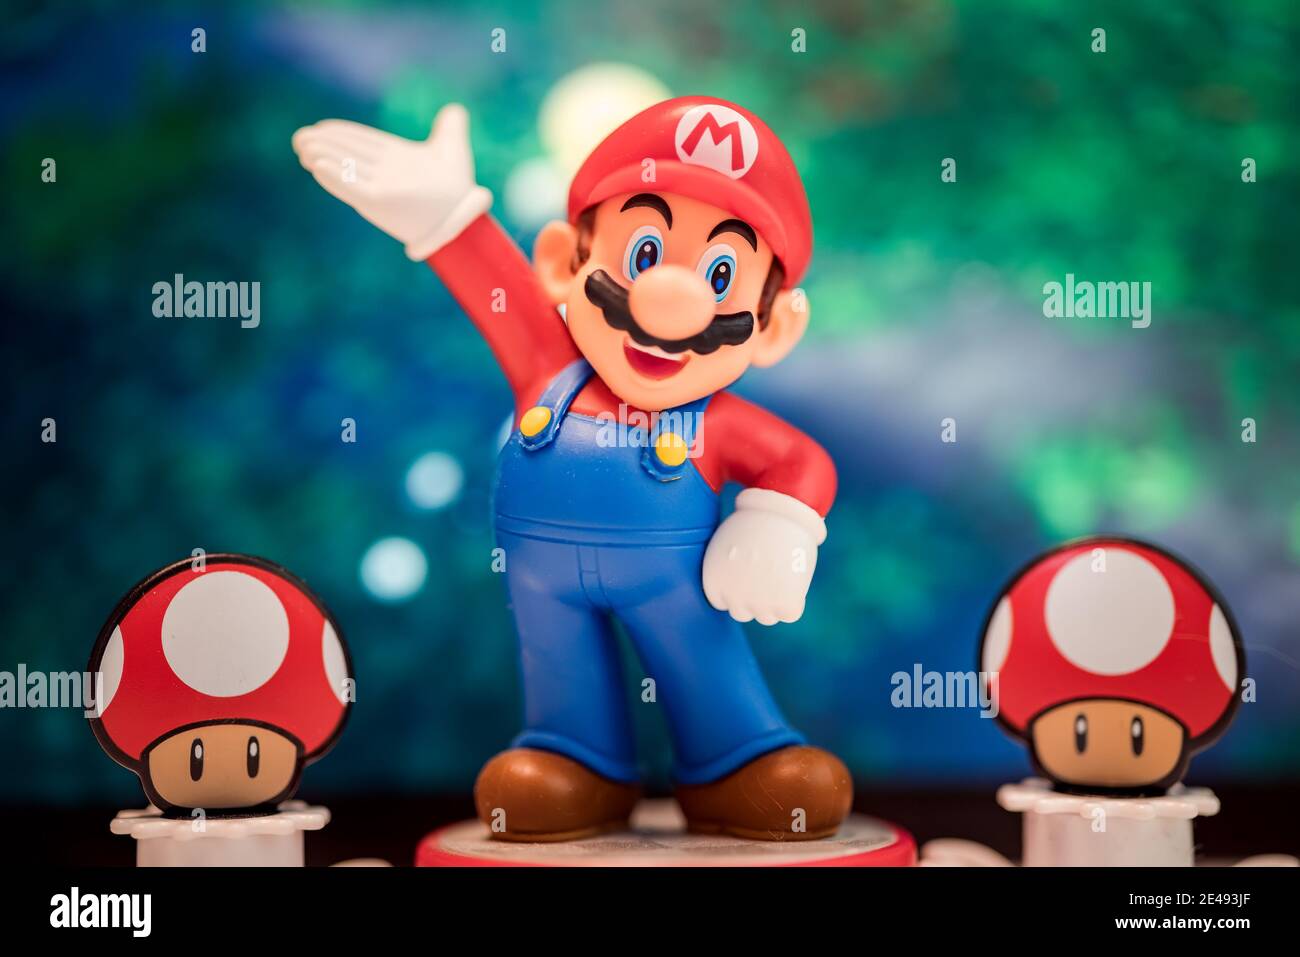 Super Mario Spielzeug, Nintendo, Japan Stockfotografie - Alamy